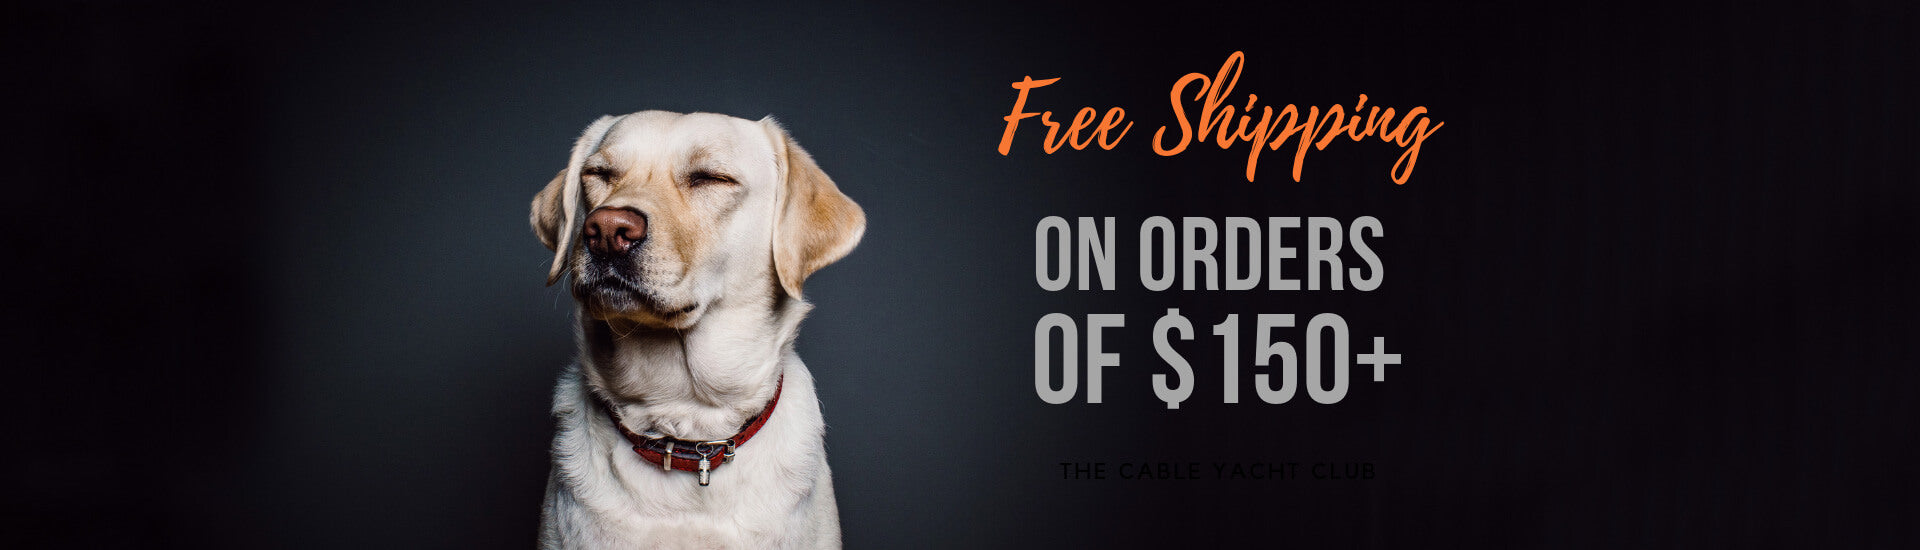 Adeo Pets Premium Pet Supplies Free Shipping